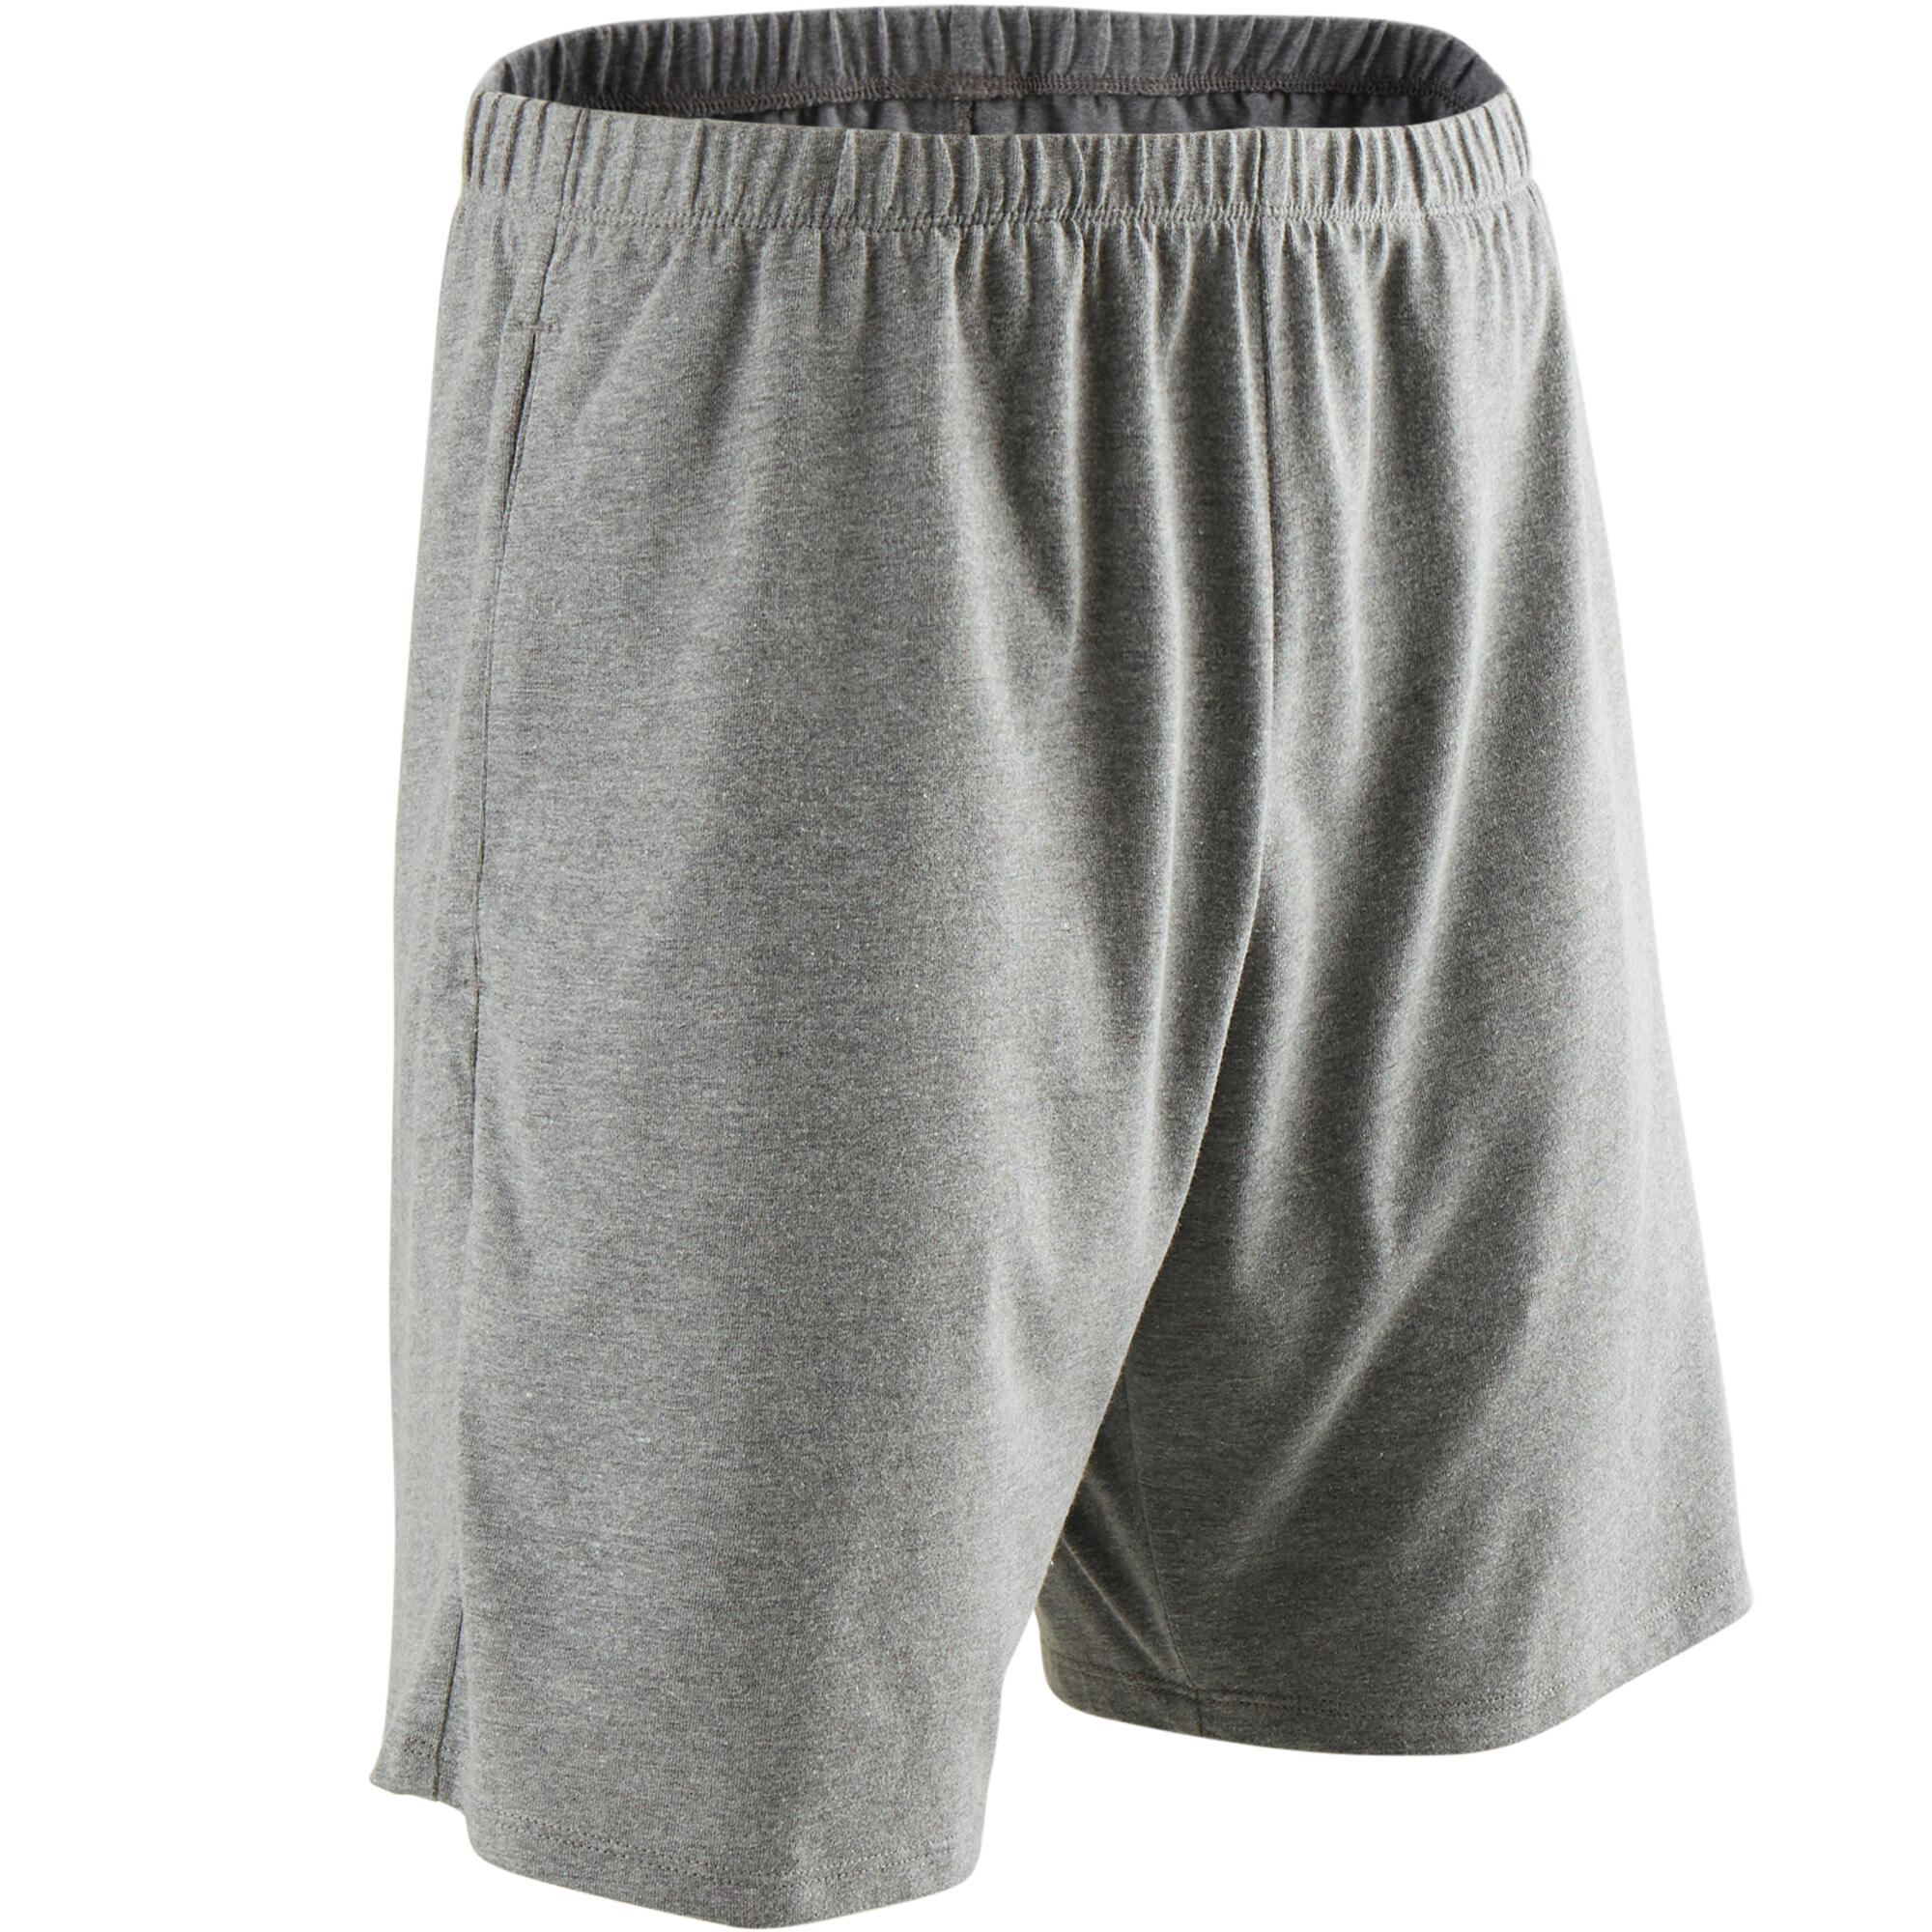 decathlon nike shorts